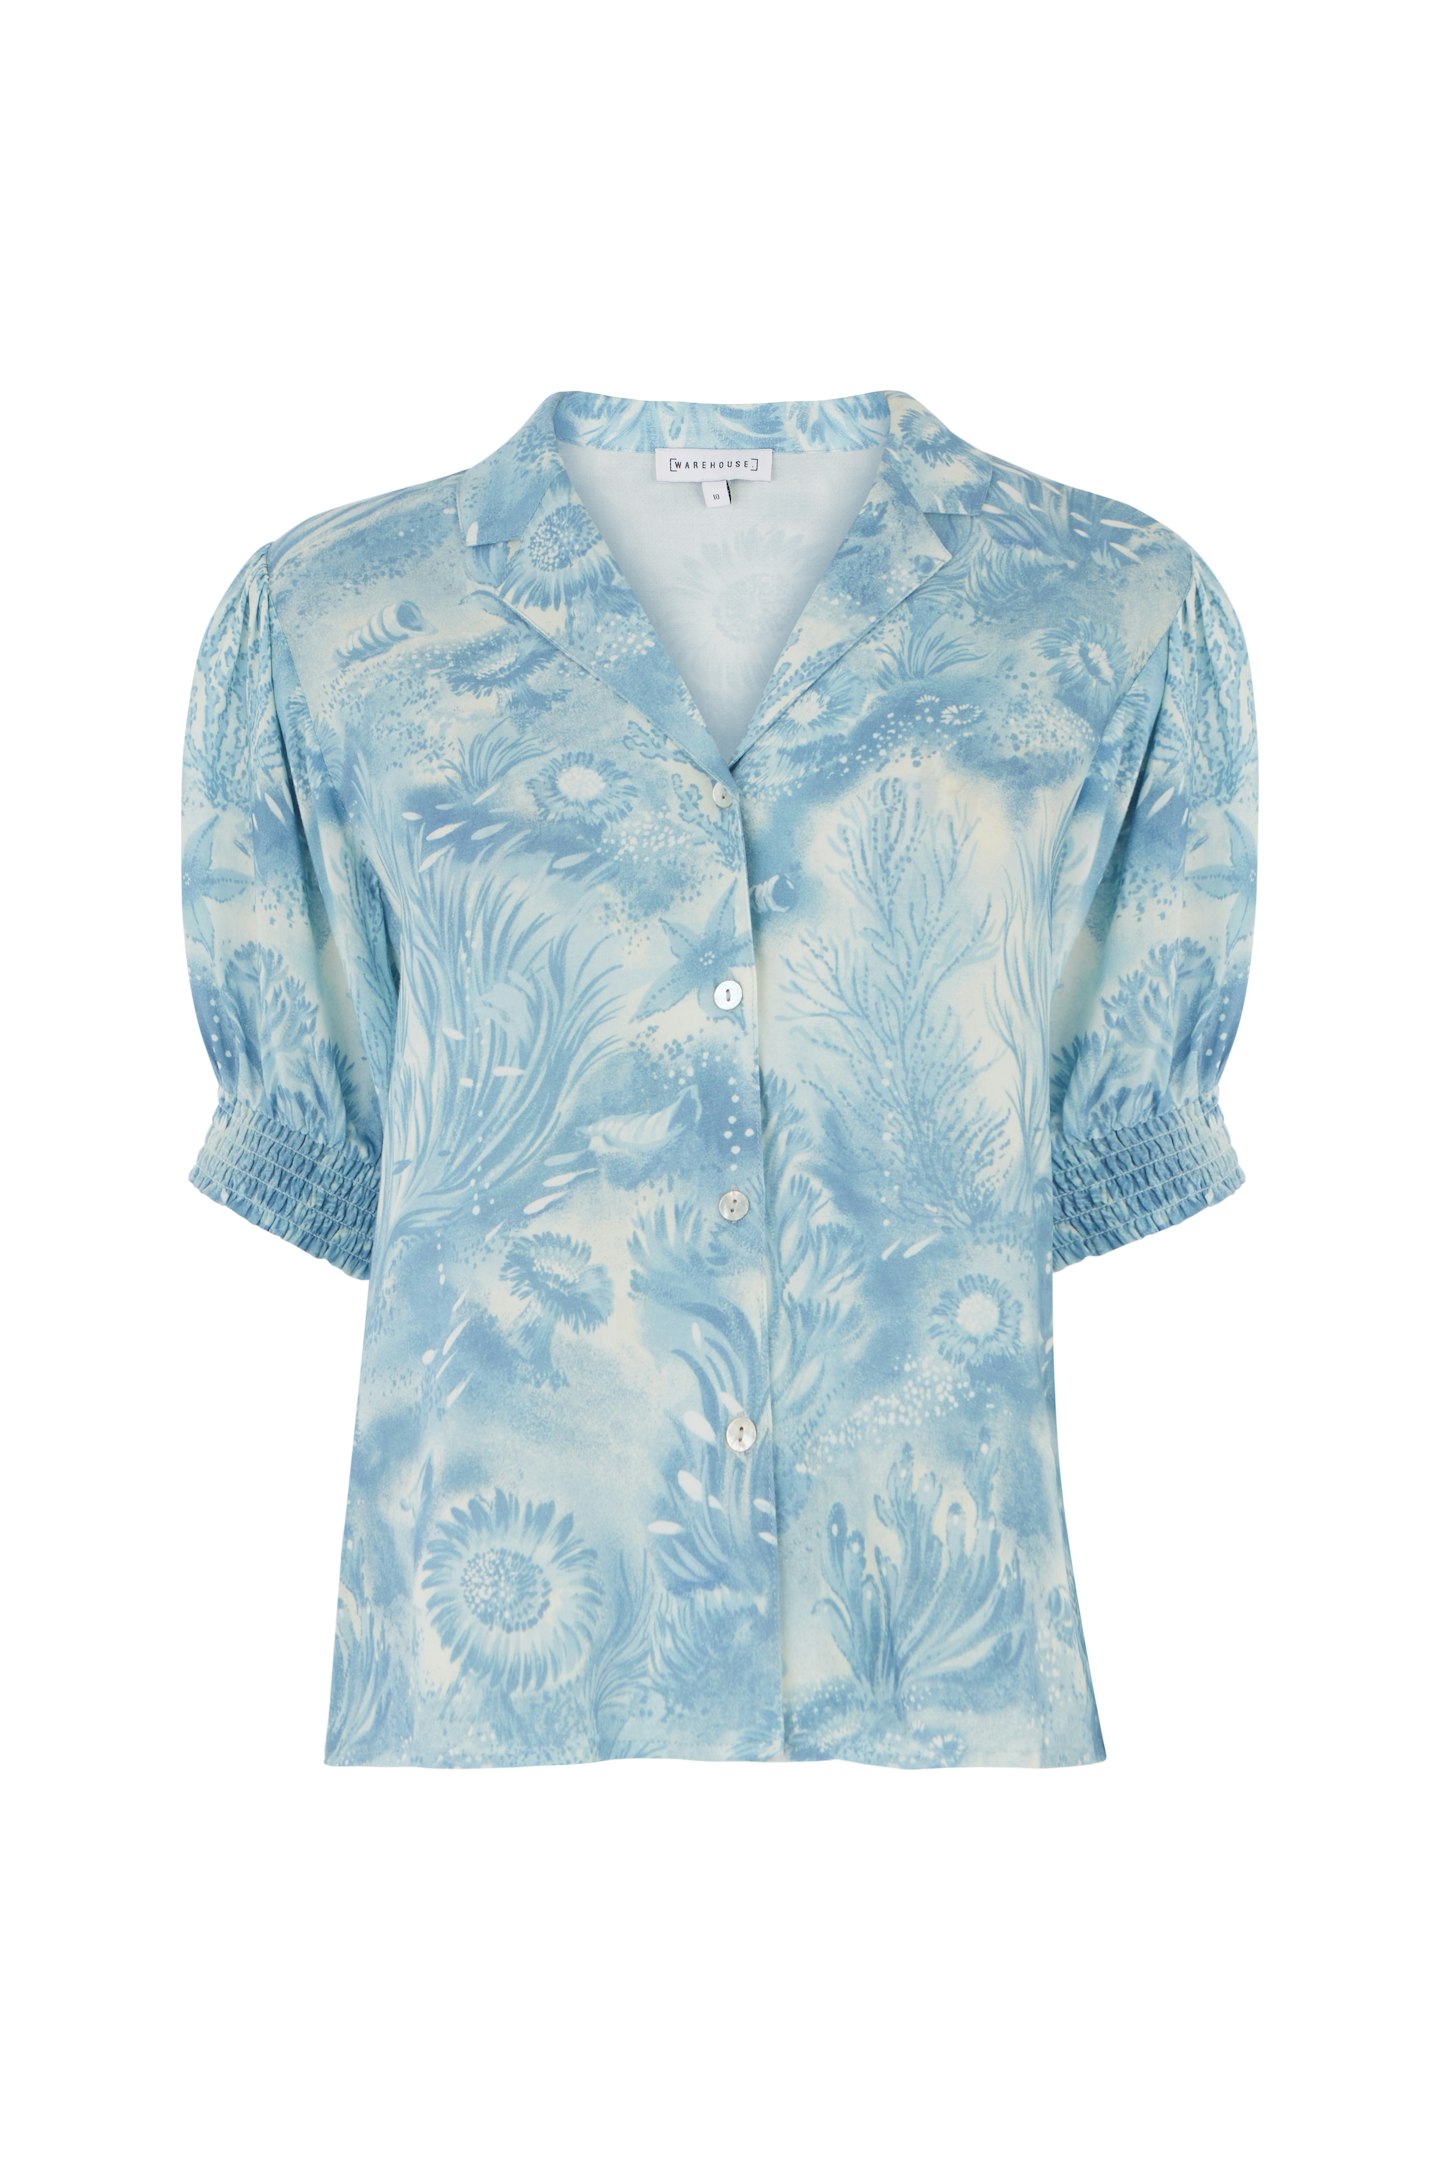 Sea Print Shirt, £35